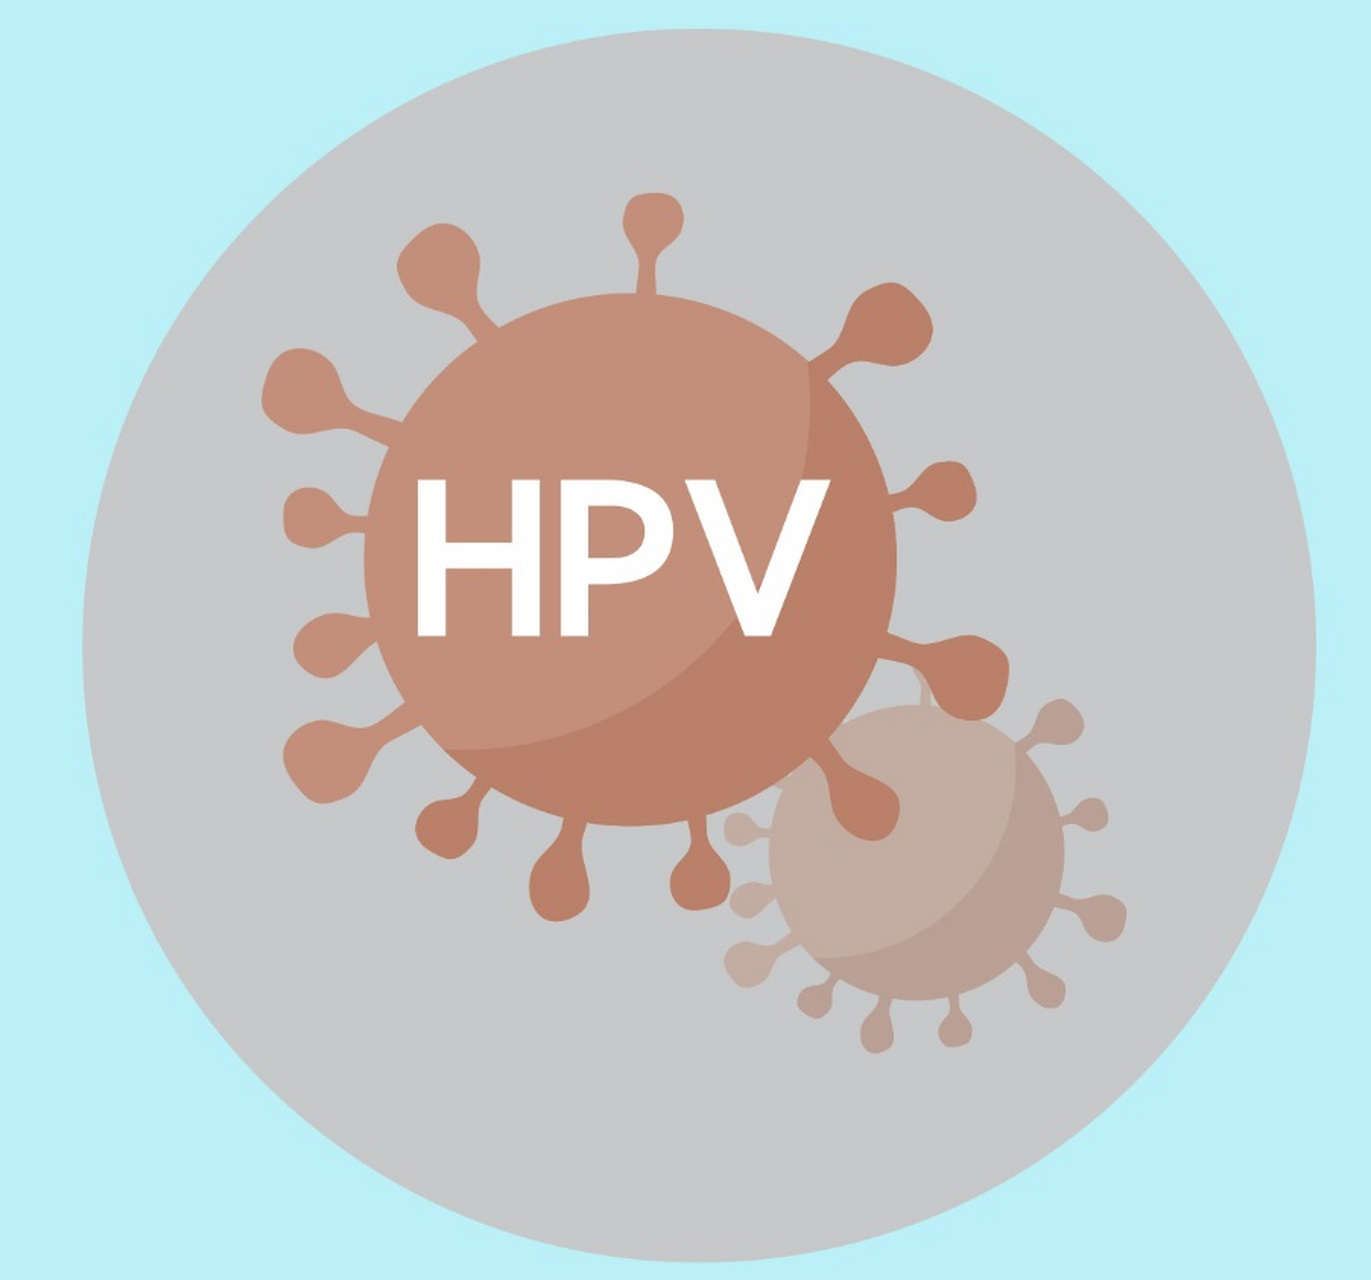 hpv43是怎么感染的 hpv43常常是性生活的过程中感染的hpv是一种病毒